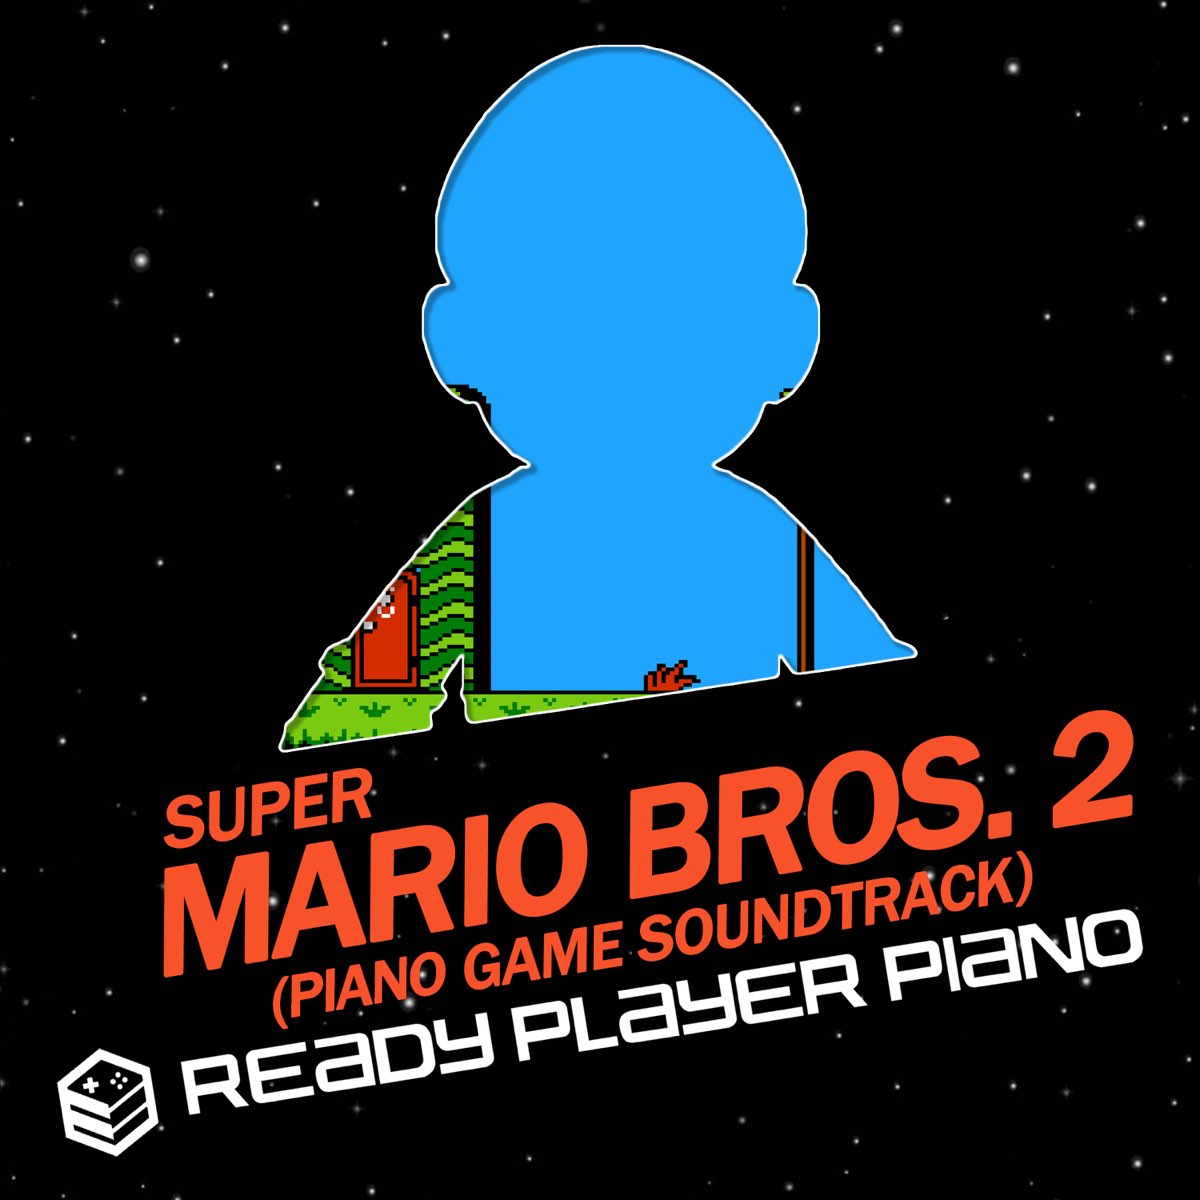 Super Mario Bros. 2 (Piano Game Soundtrack) - Album by Ready Player Piano -  Apple Music